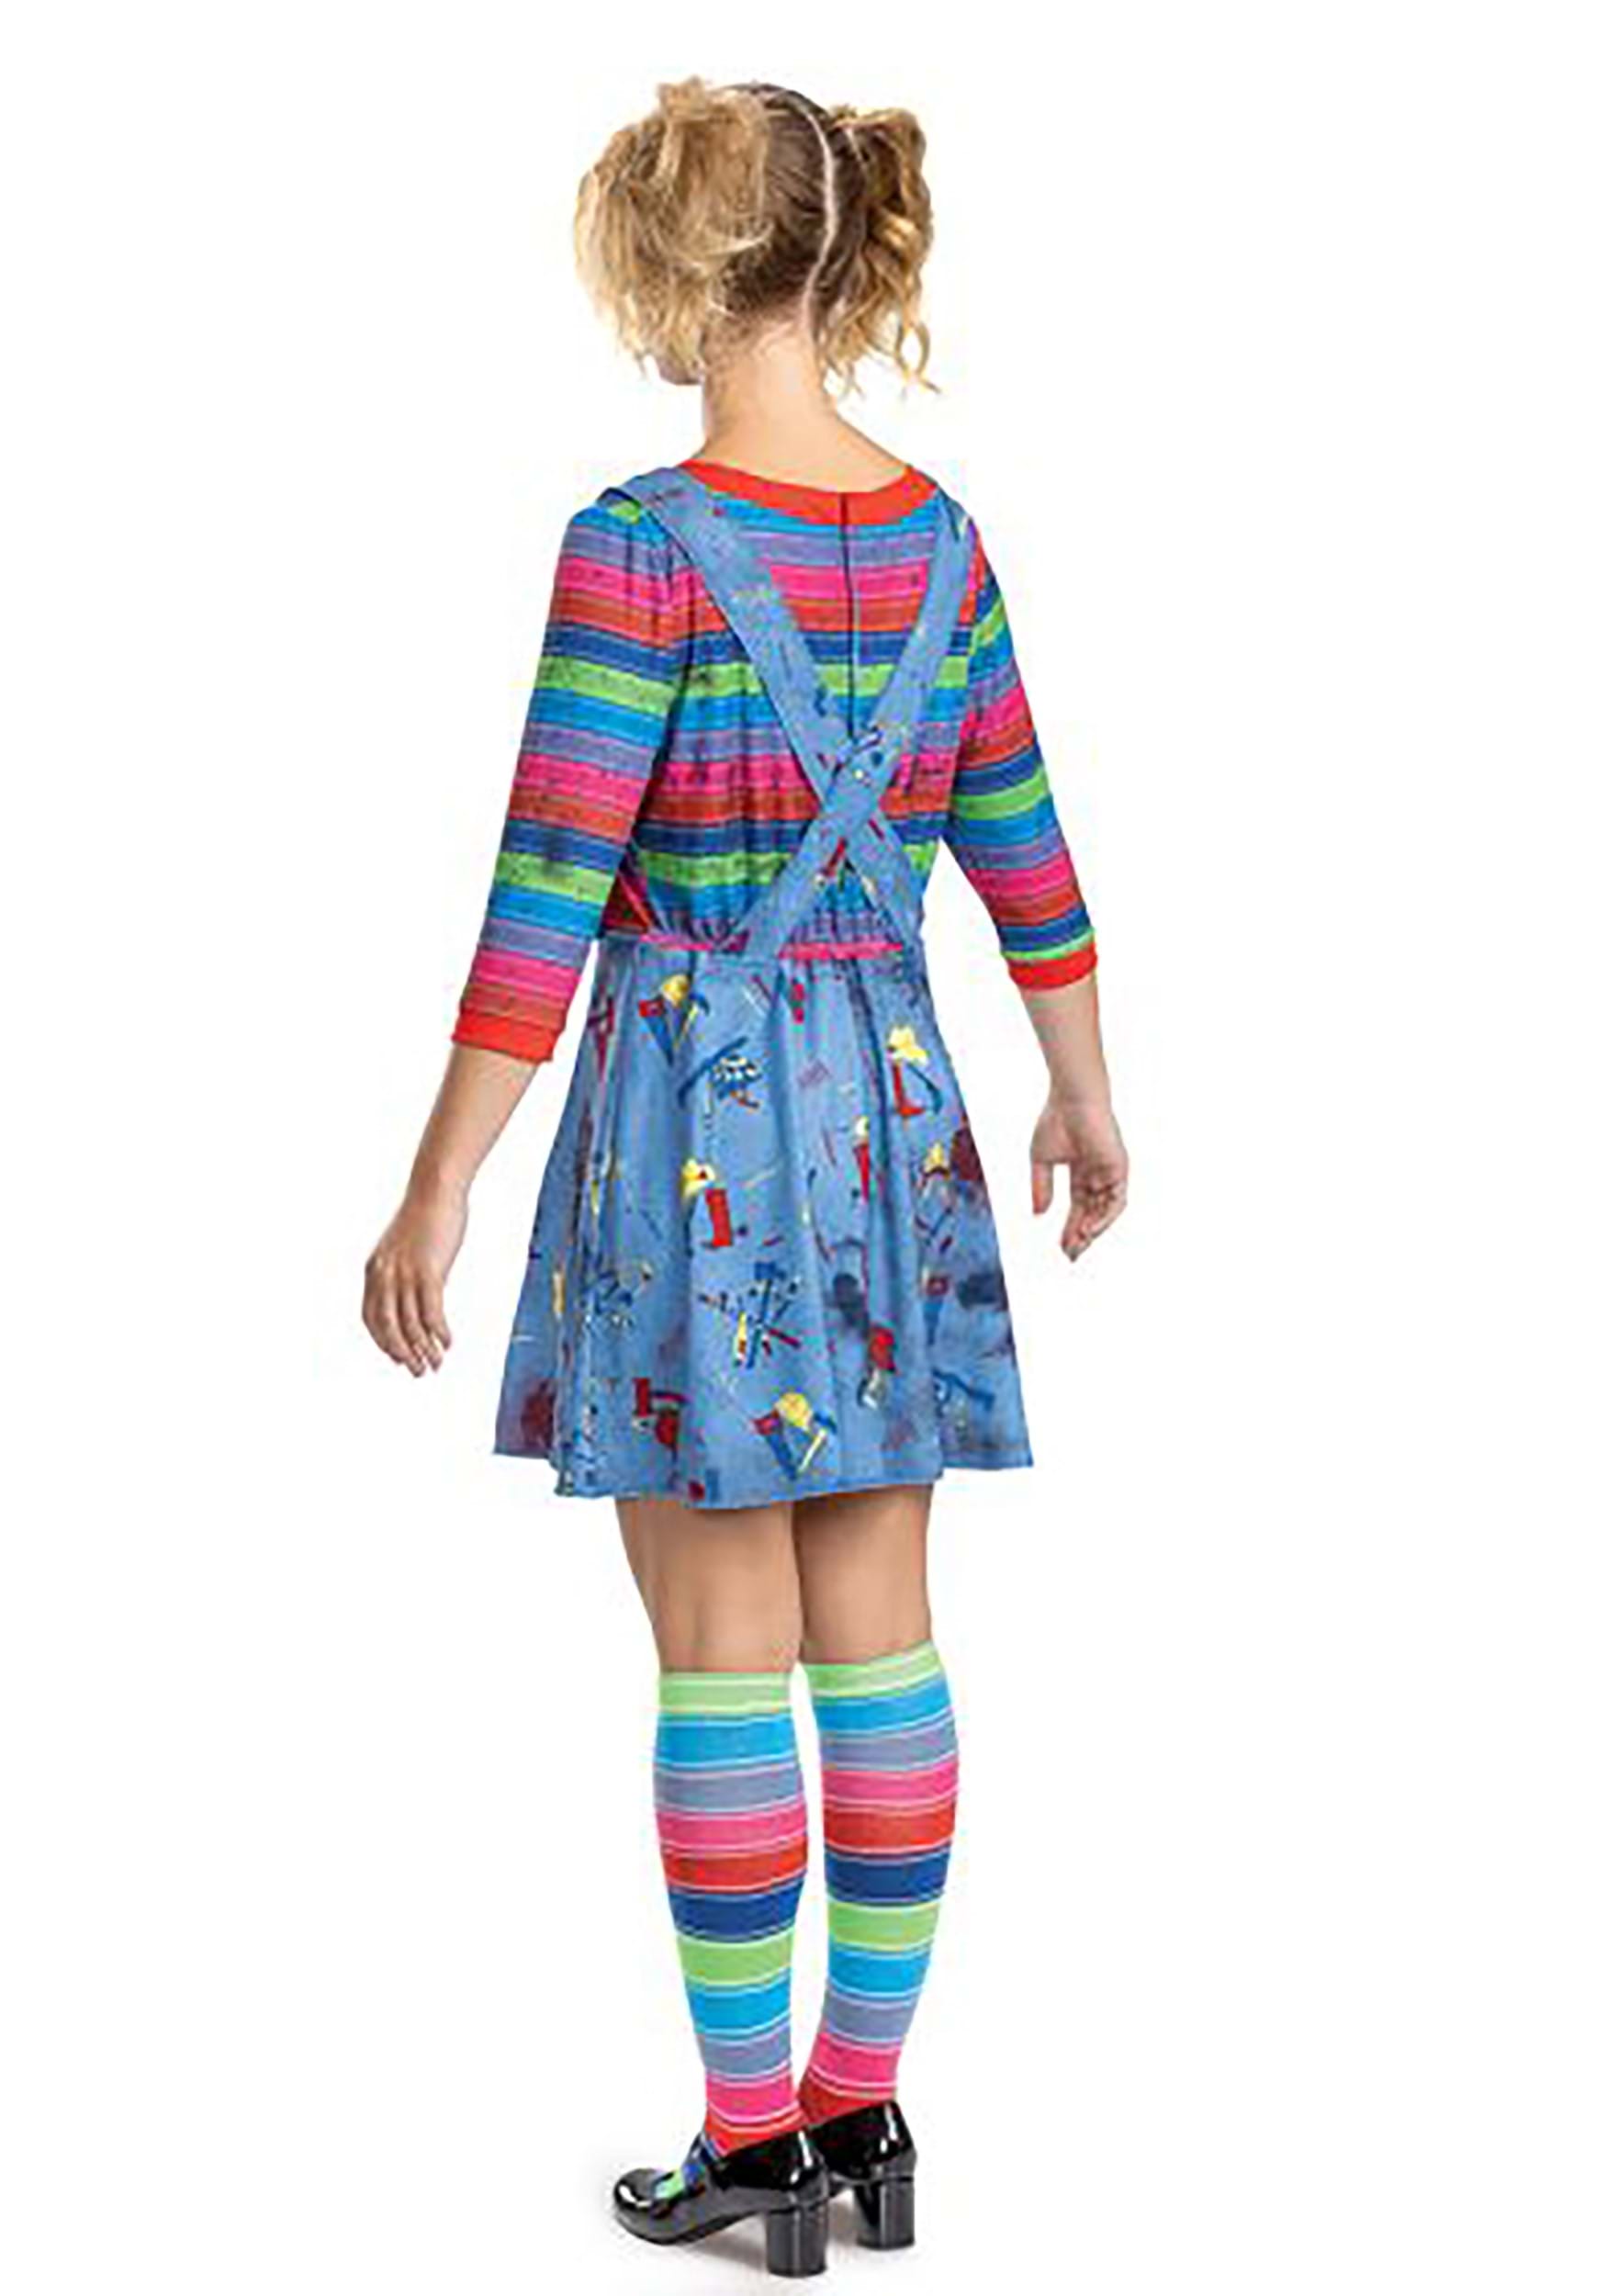 Women's Play Women's Deluxe Chucky Dress Costume